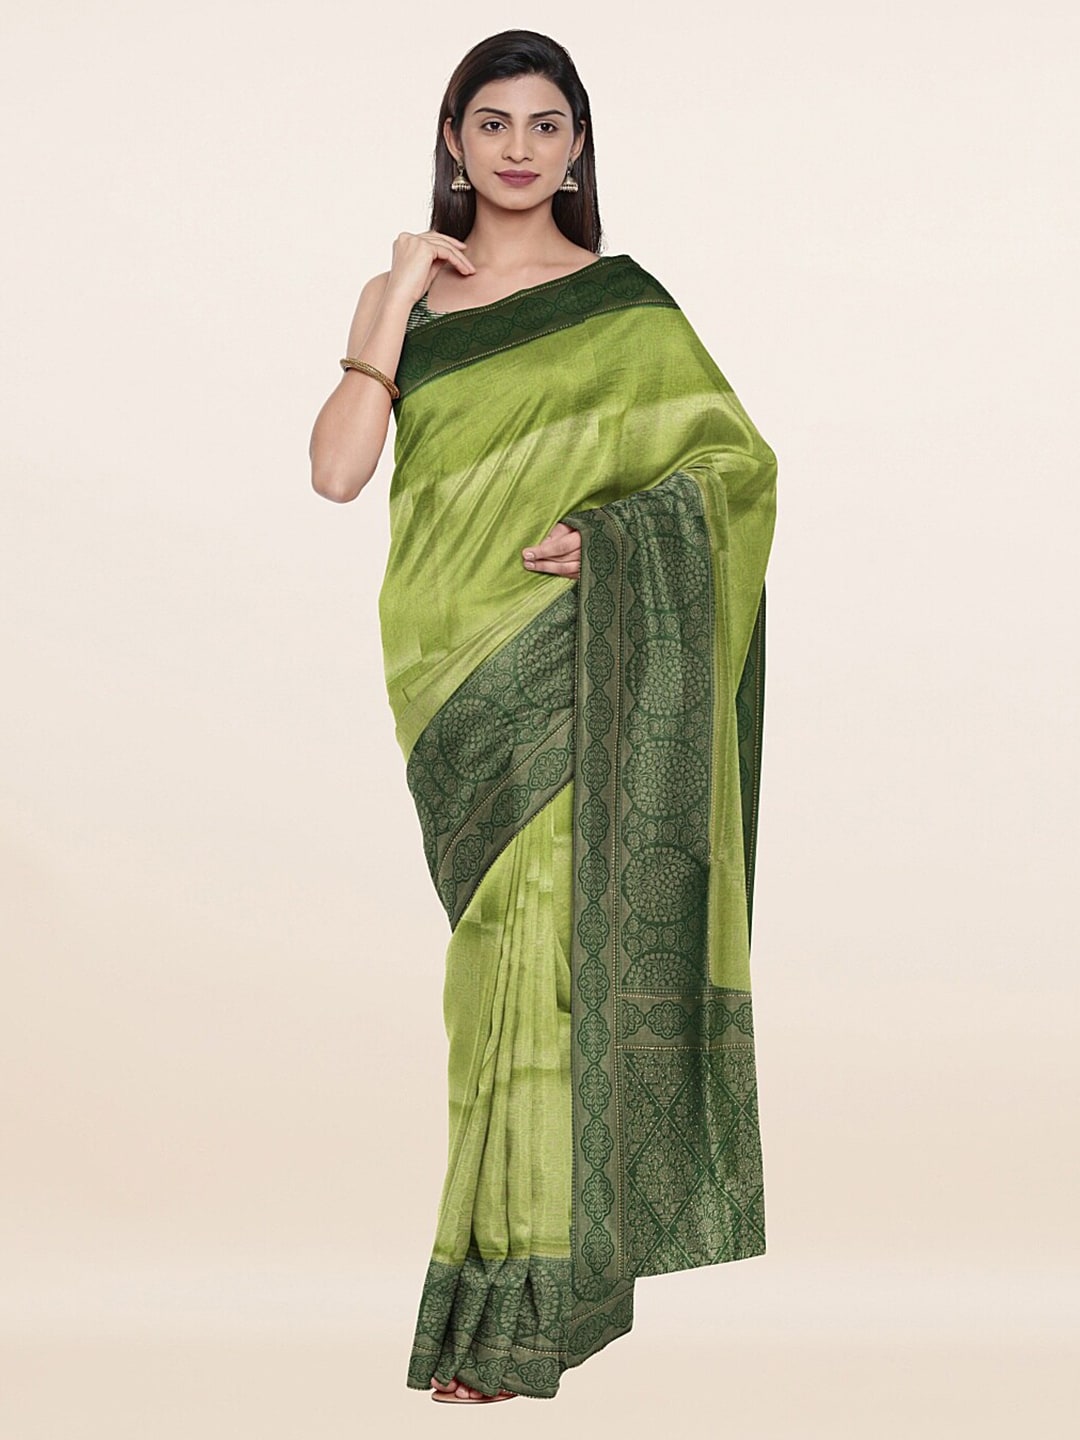 Pothys Green Woven Design Floral Art Silk Saree Price in India